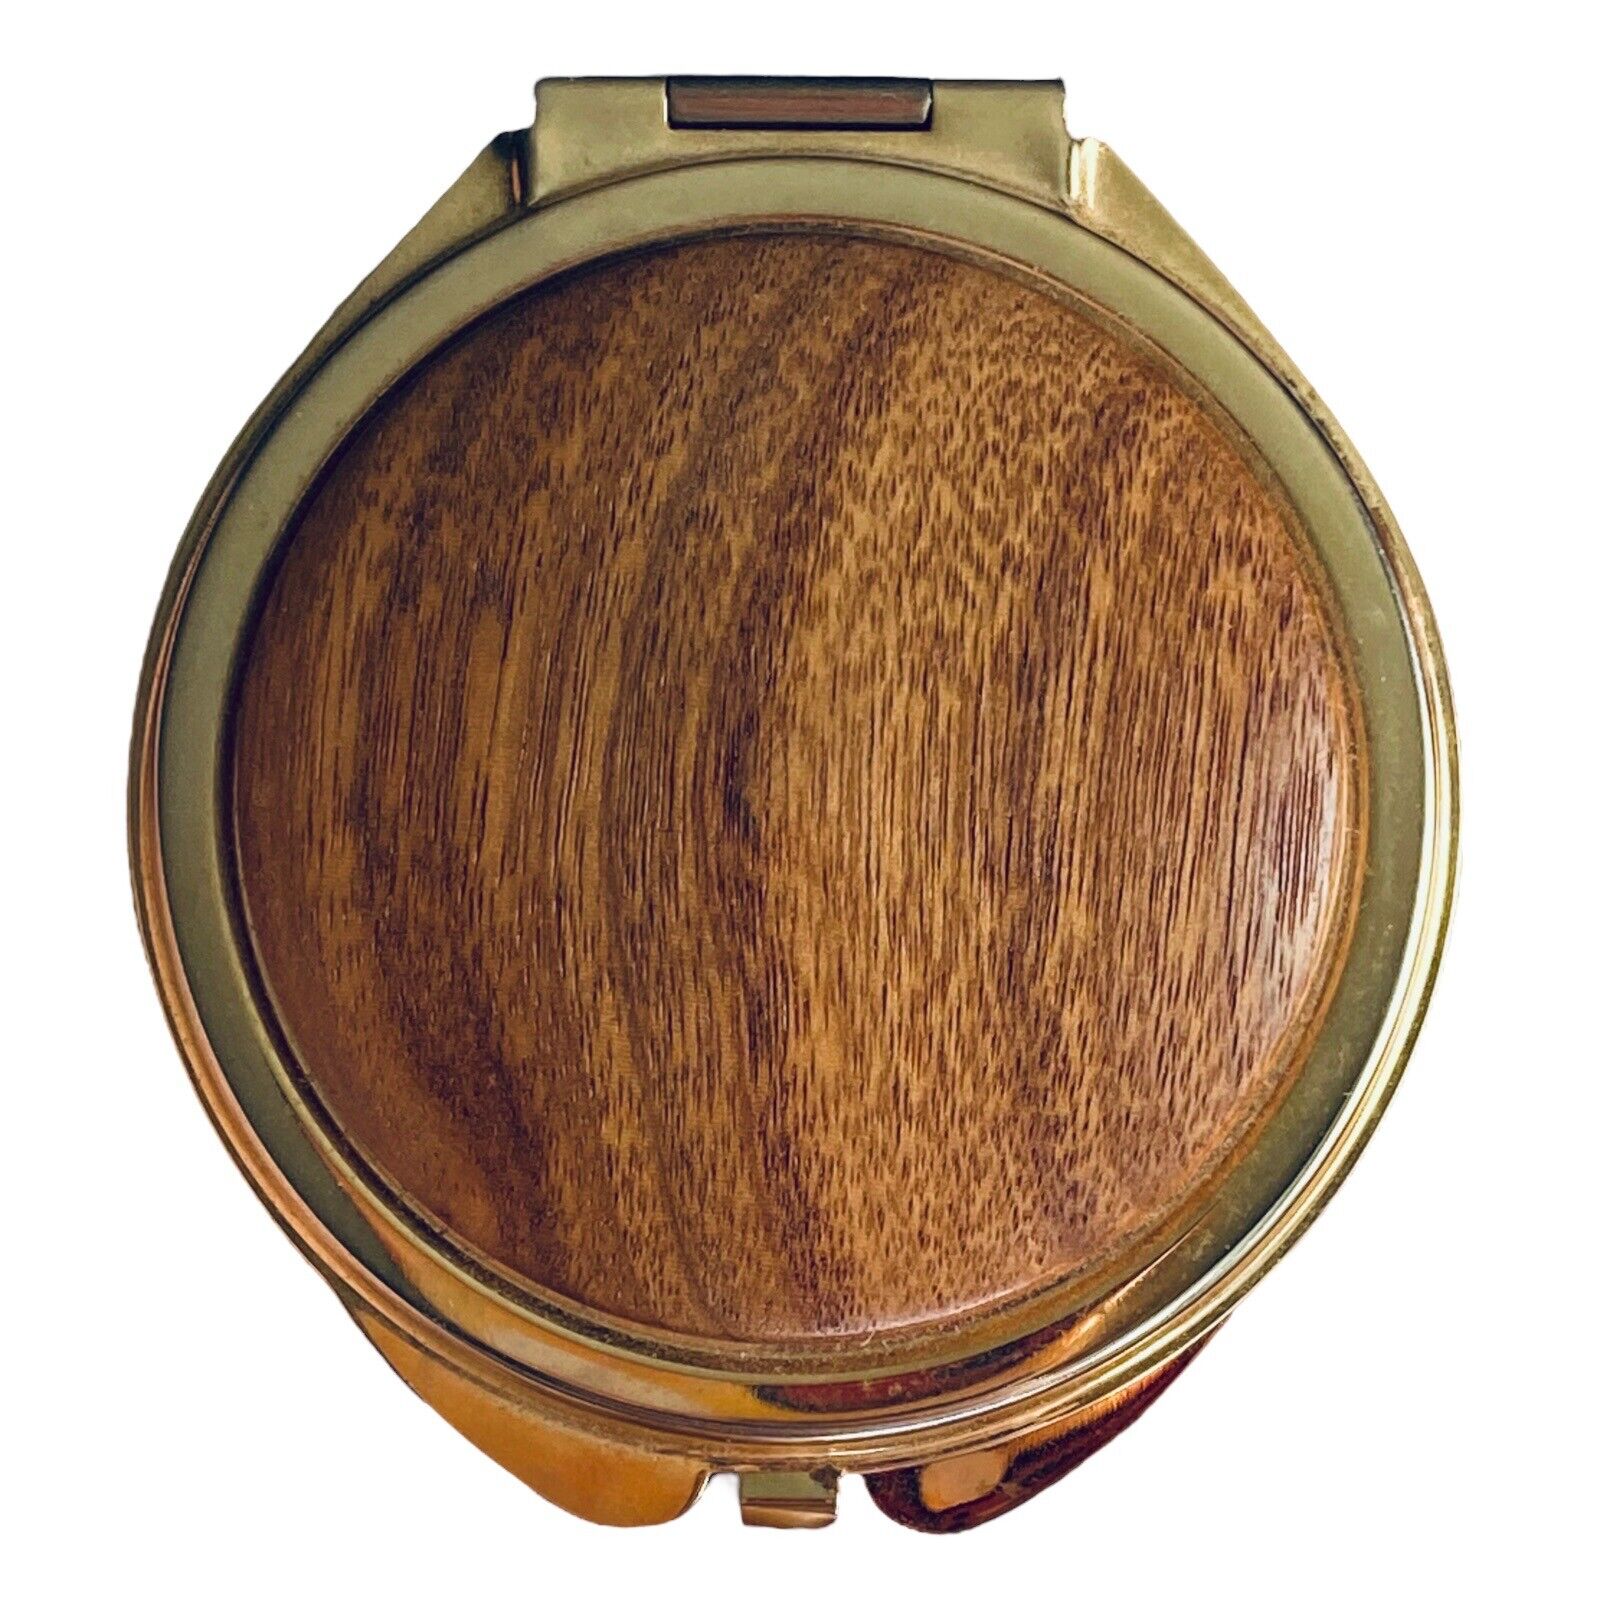 Vintage Wood Grain Compact Hand Mirror For Purse Makeup Handbag A31